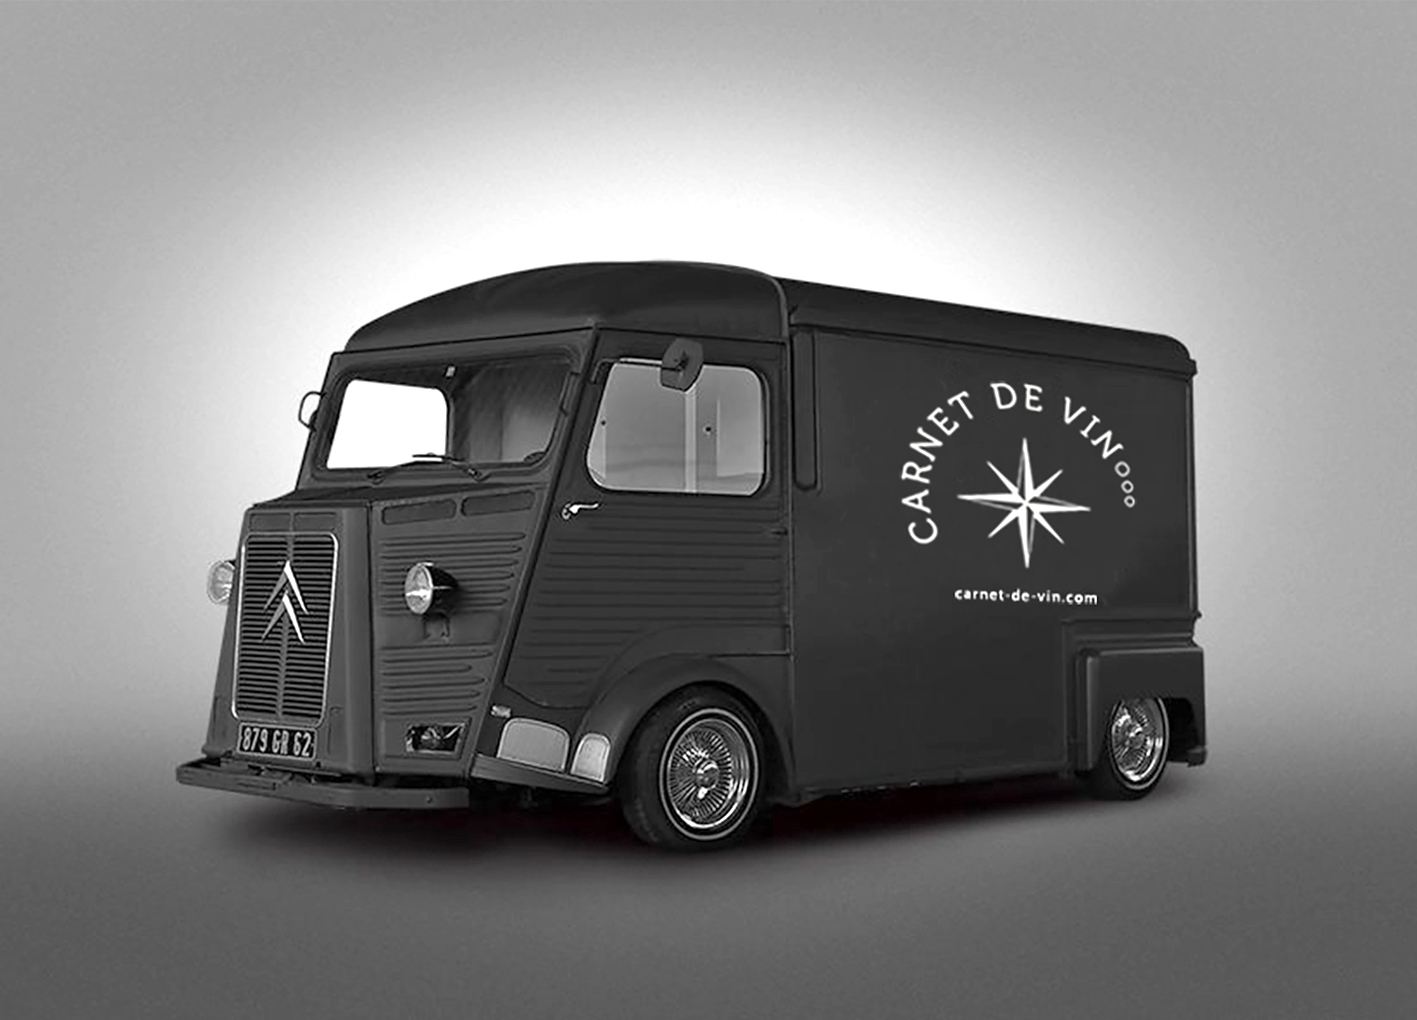 CARNET VIN camion mockup 2020 - Carnet de vin